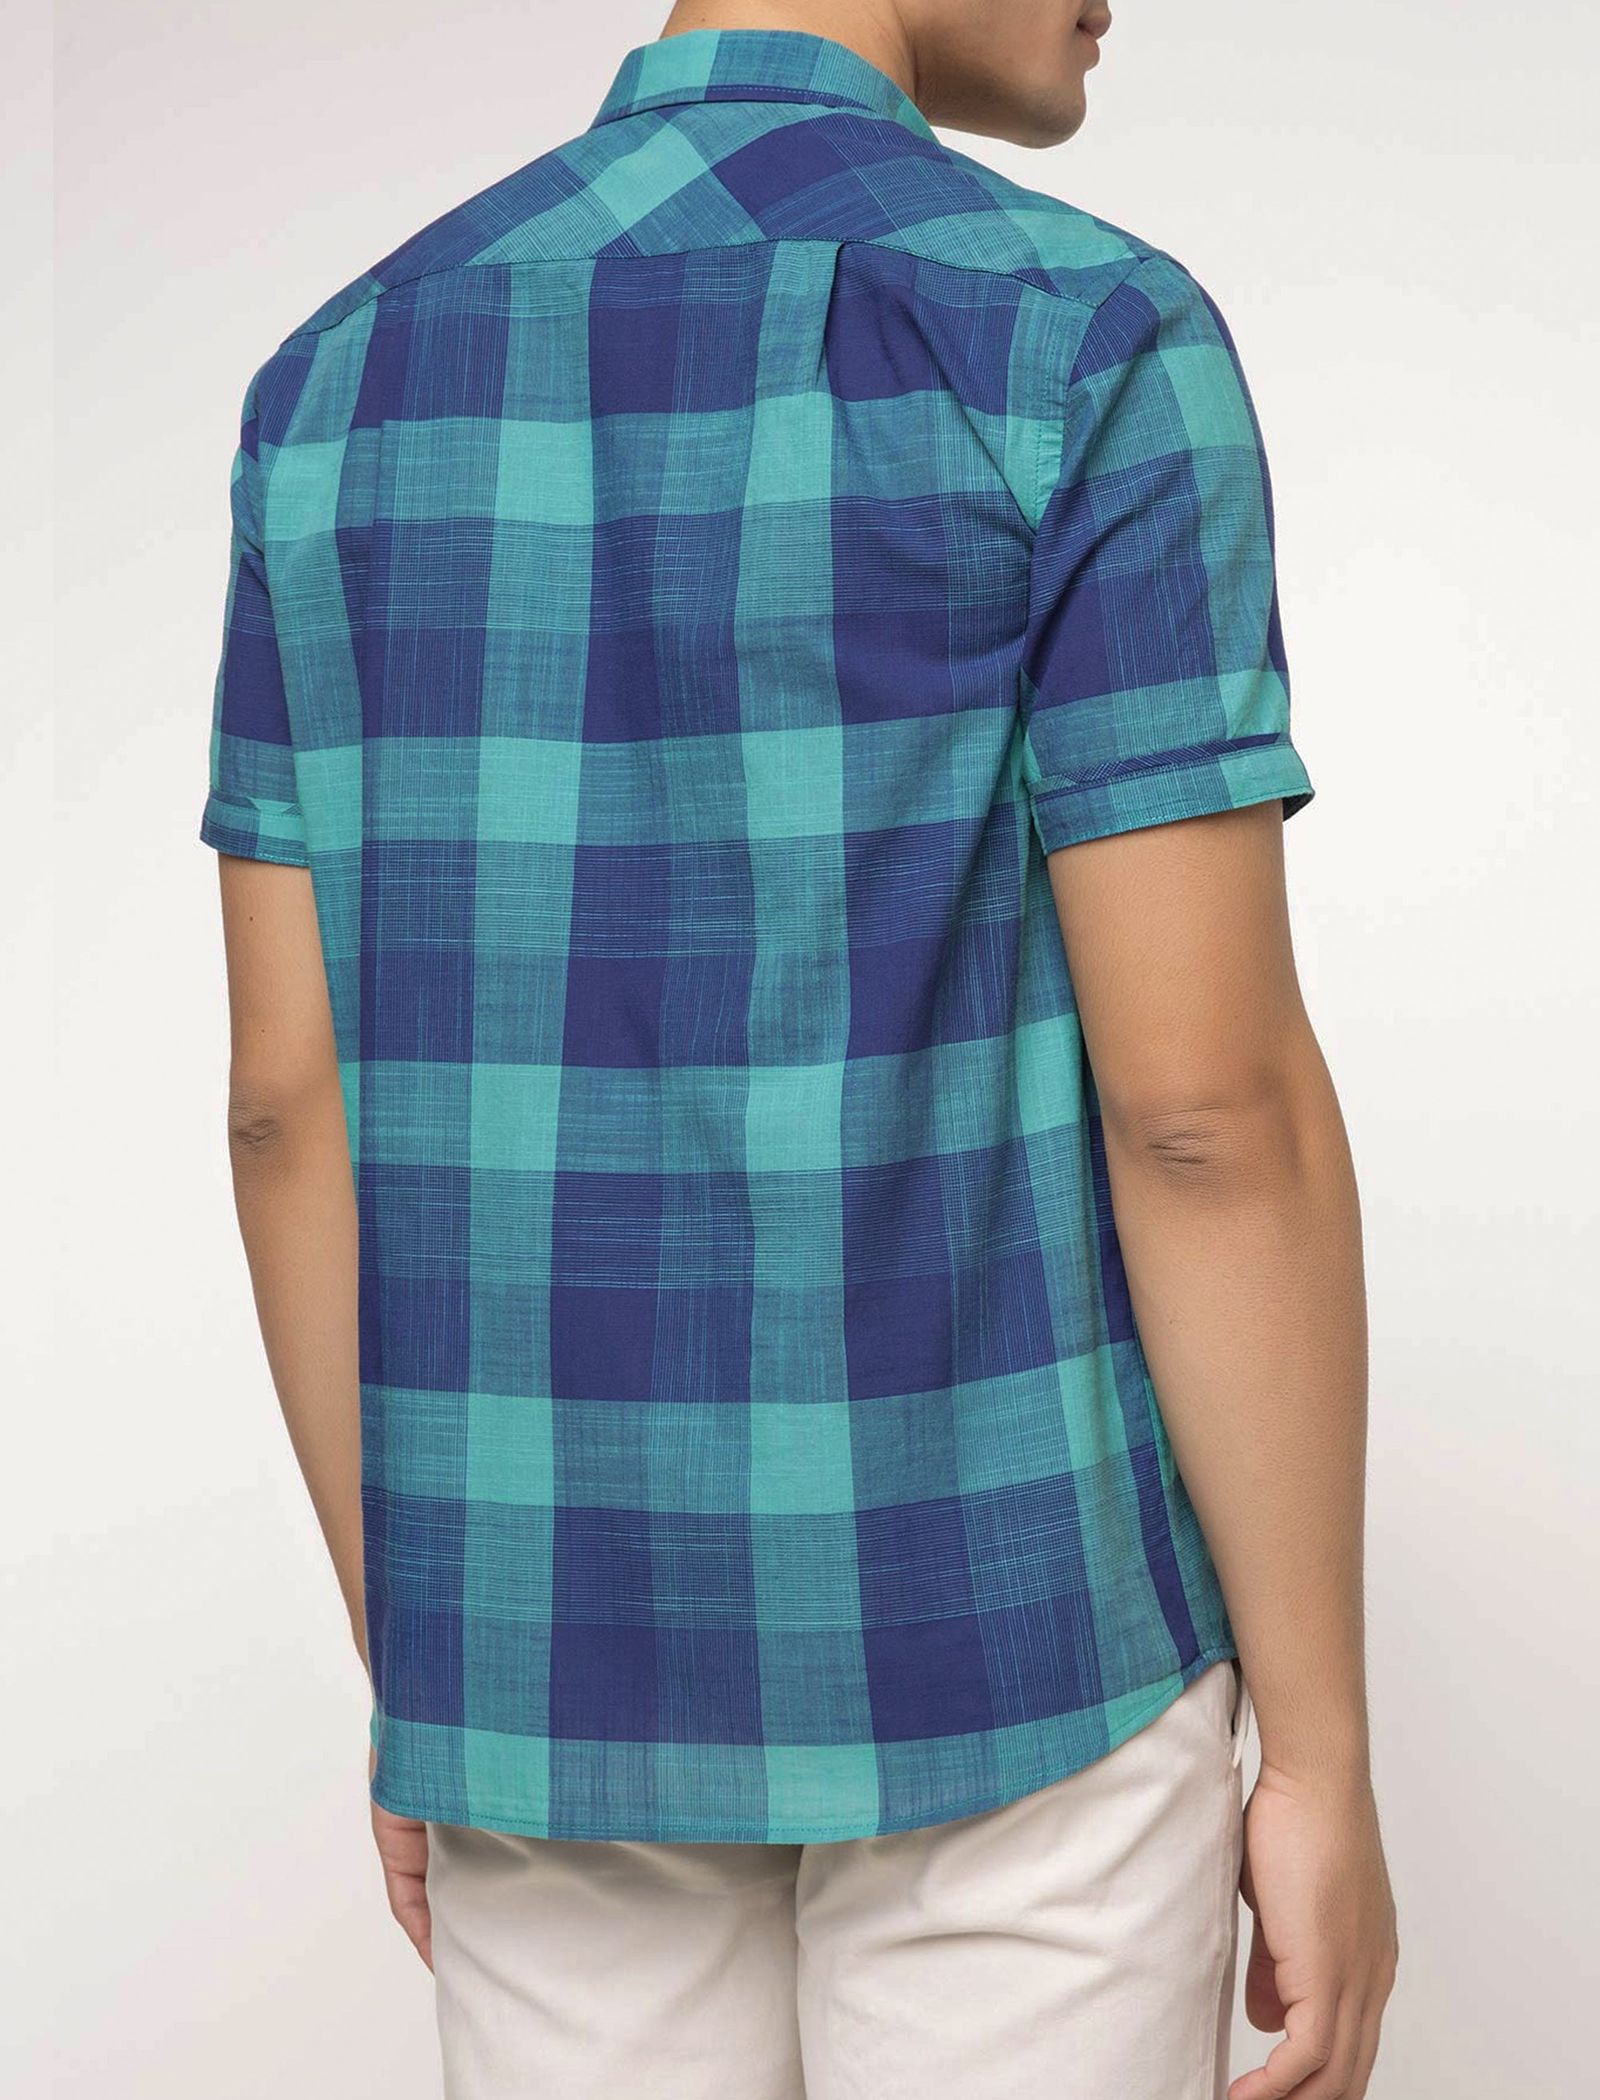 پیراهن نخی آستین کوتاه مردانه - دفکتو - آبي و سبز آبي - 3